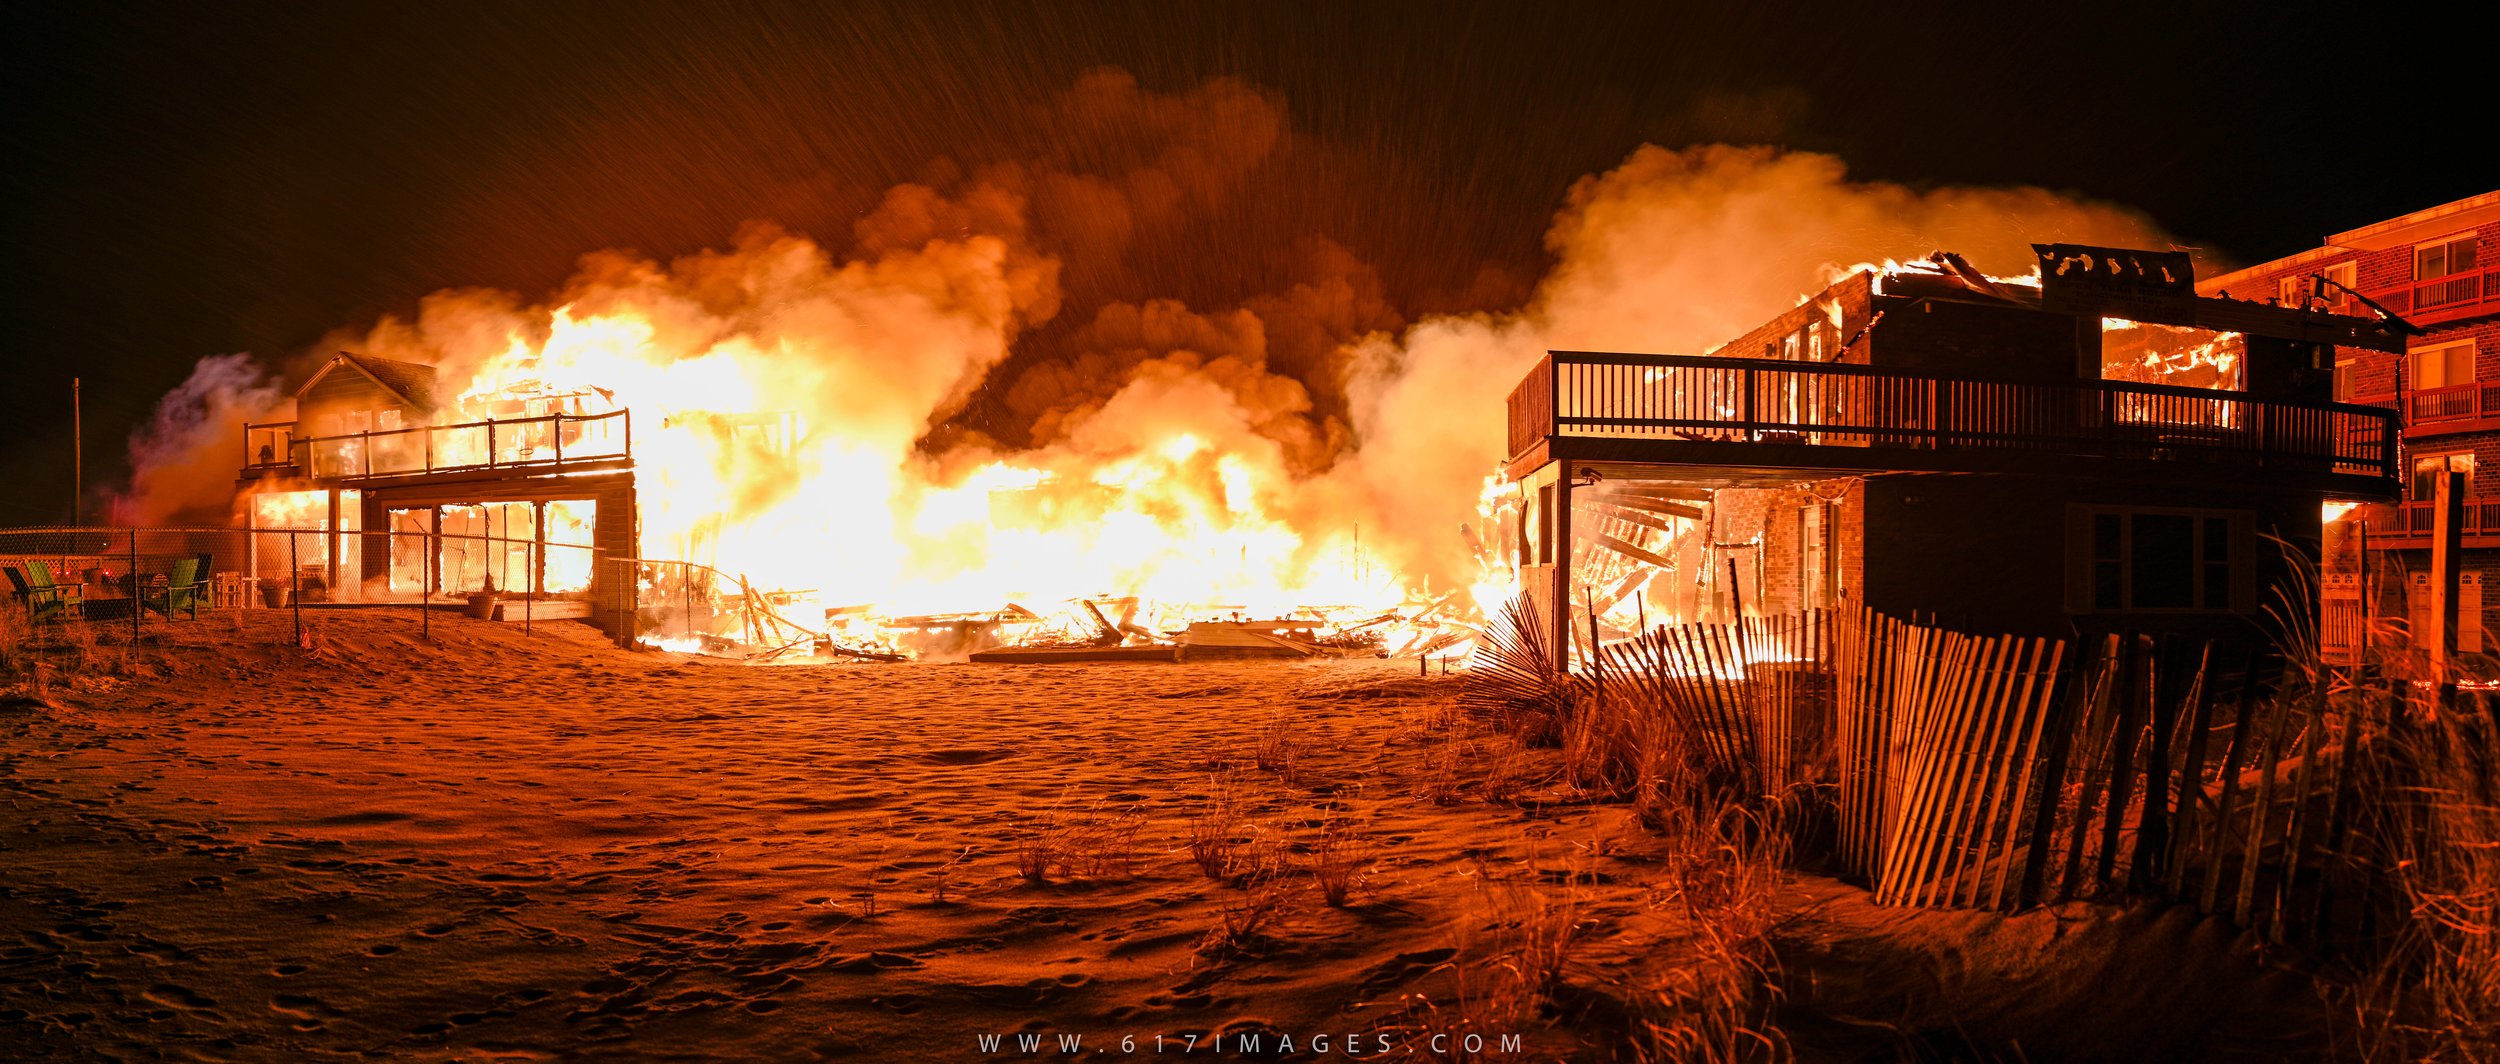 Salisbury Fire2874-Pano.jpg